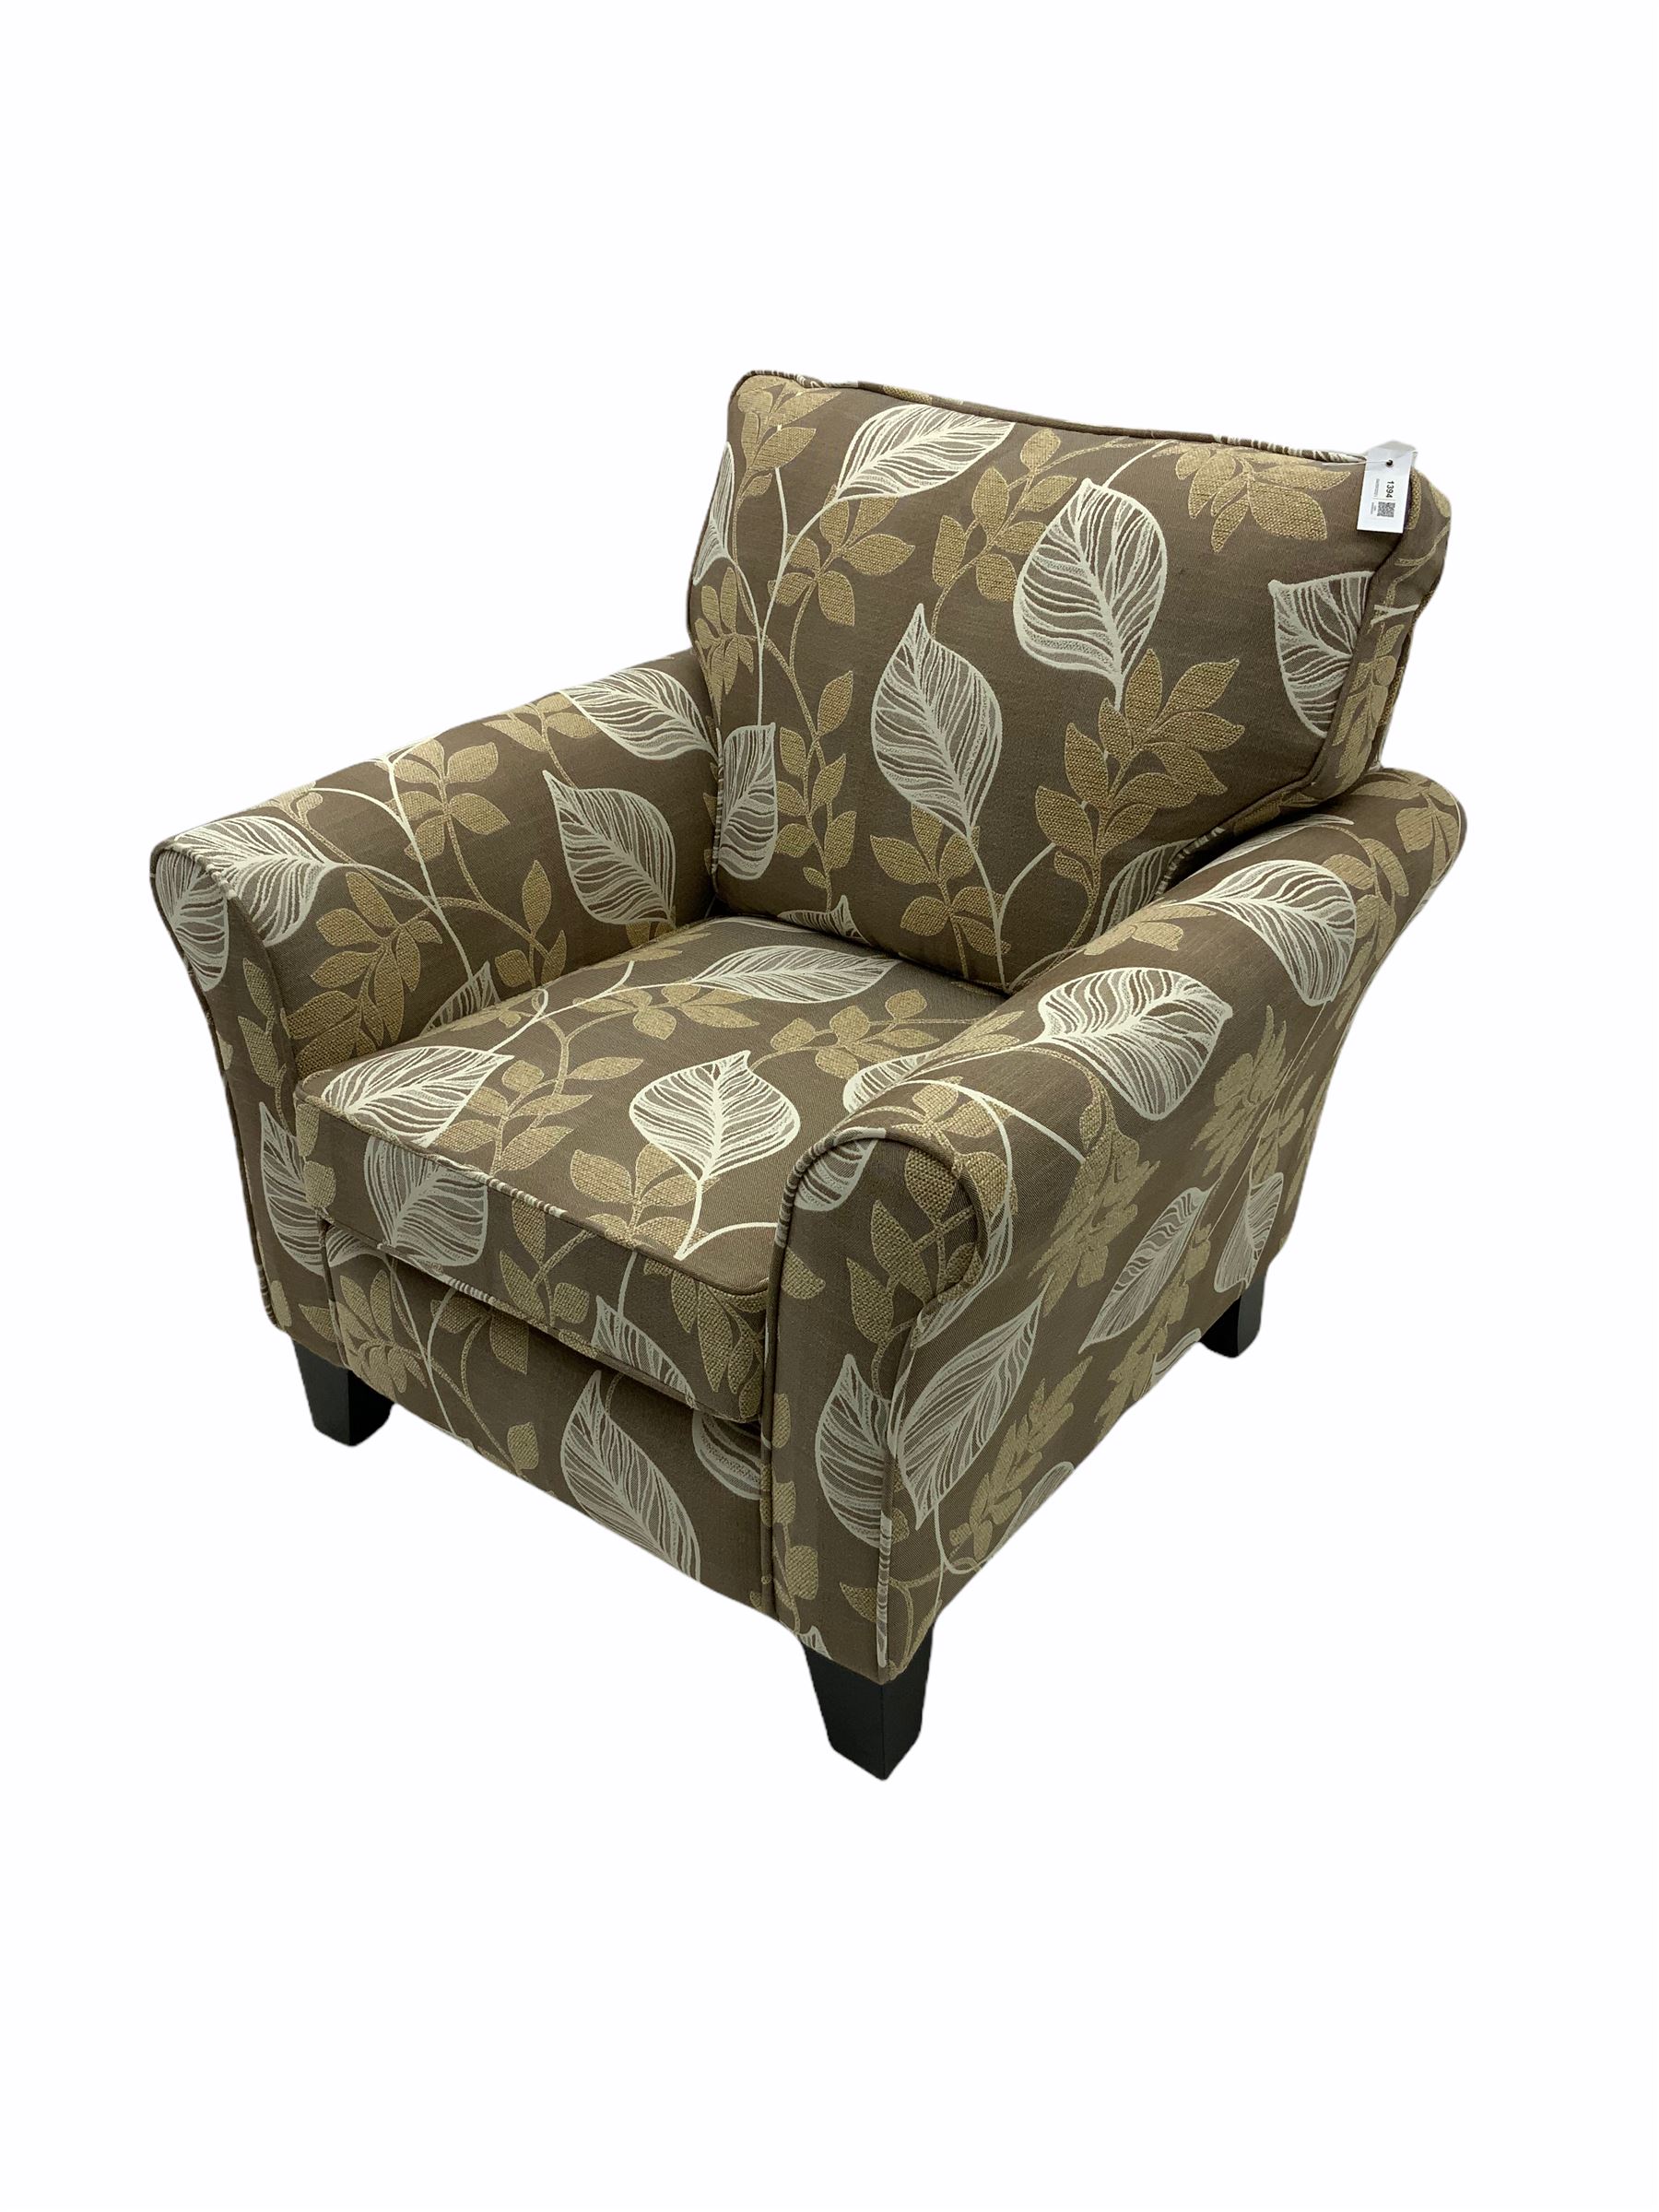 Alstons standard armchair - Image 2 of 3